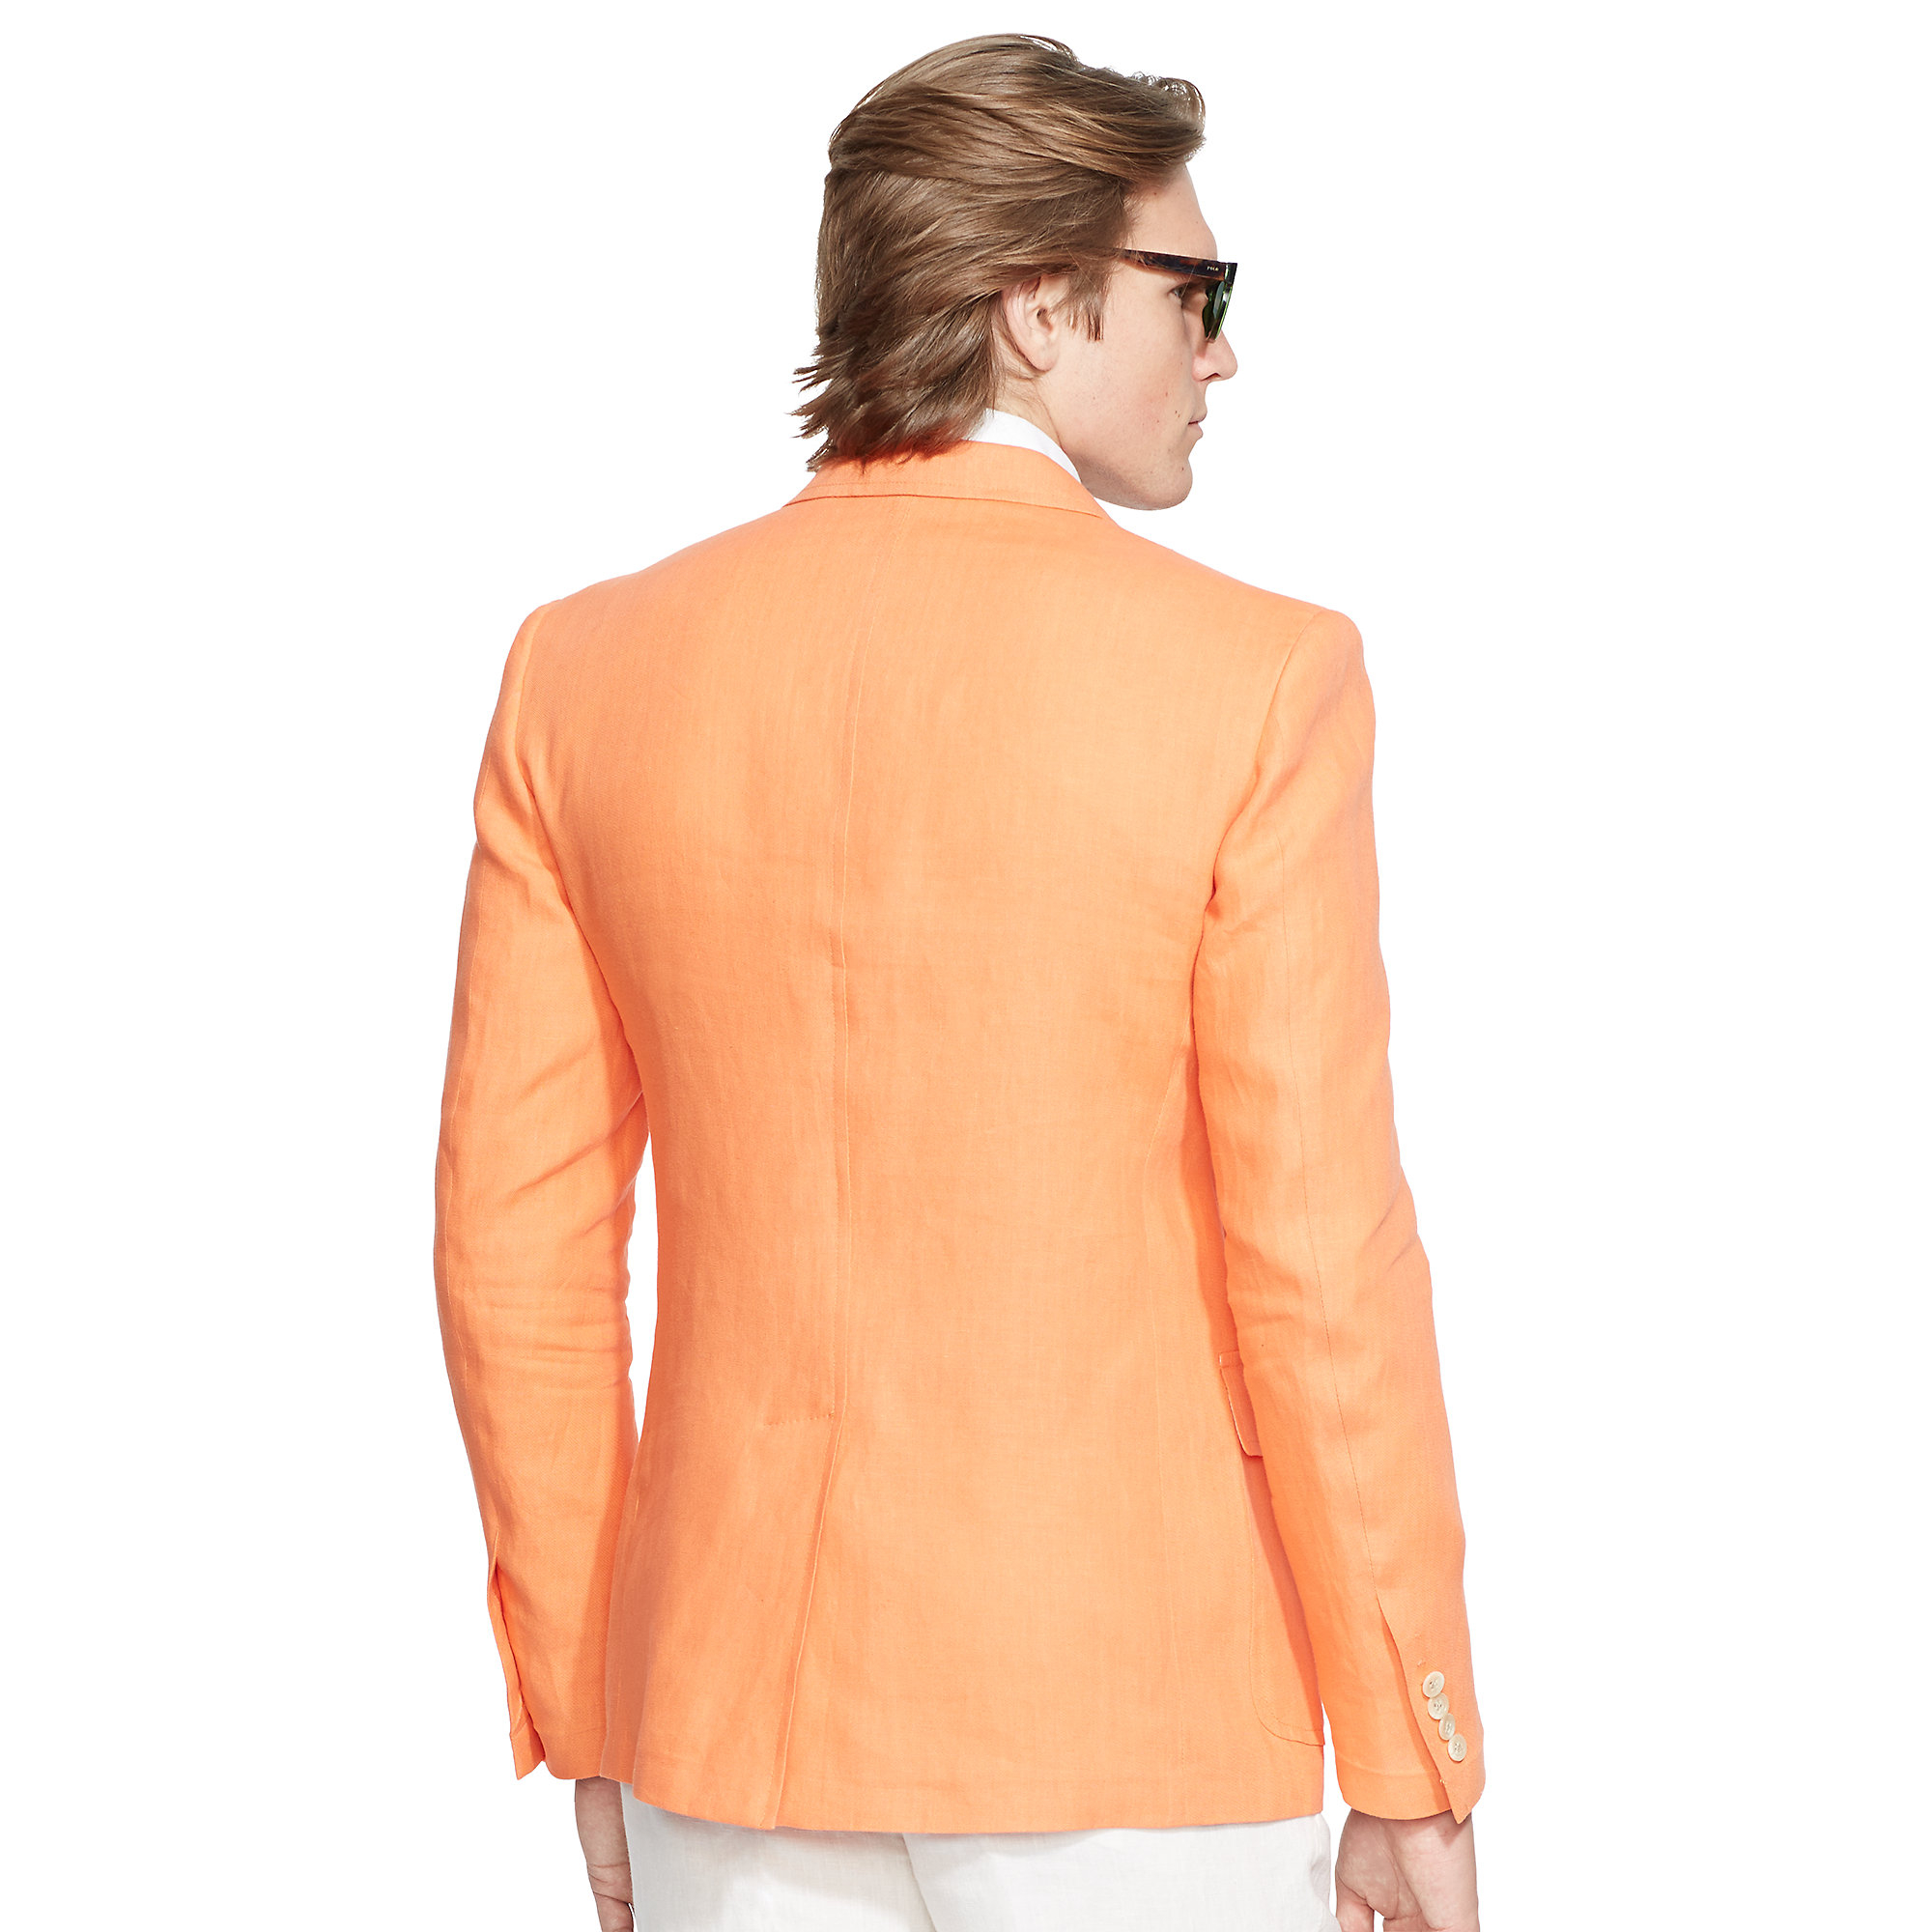 Polo Ralph Lauren Polo Linen Sport Coat in Orange for Men | Lyst